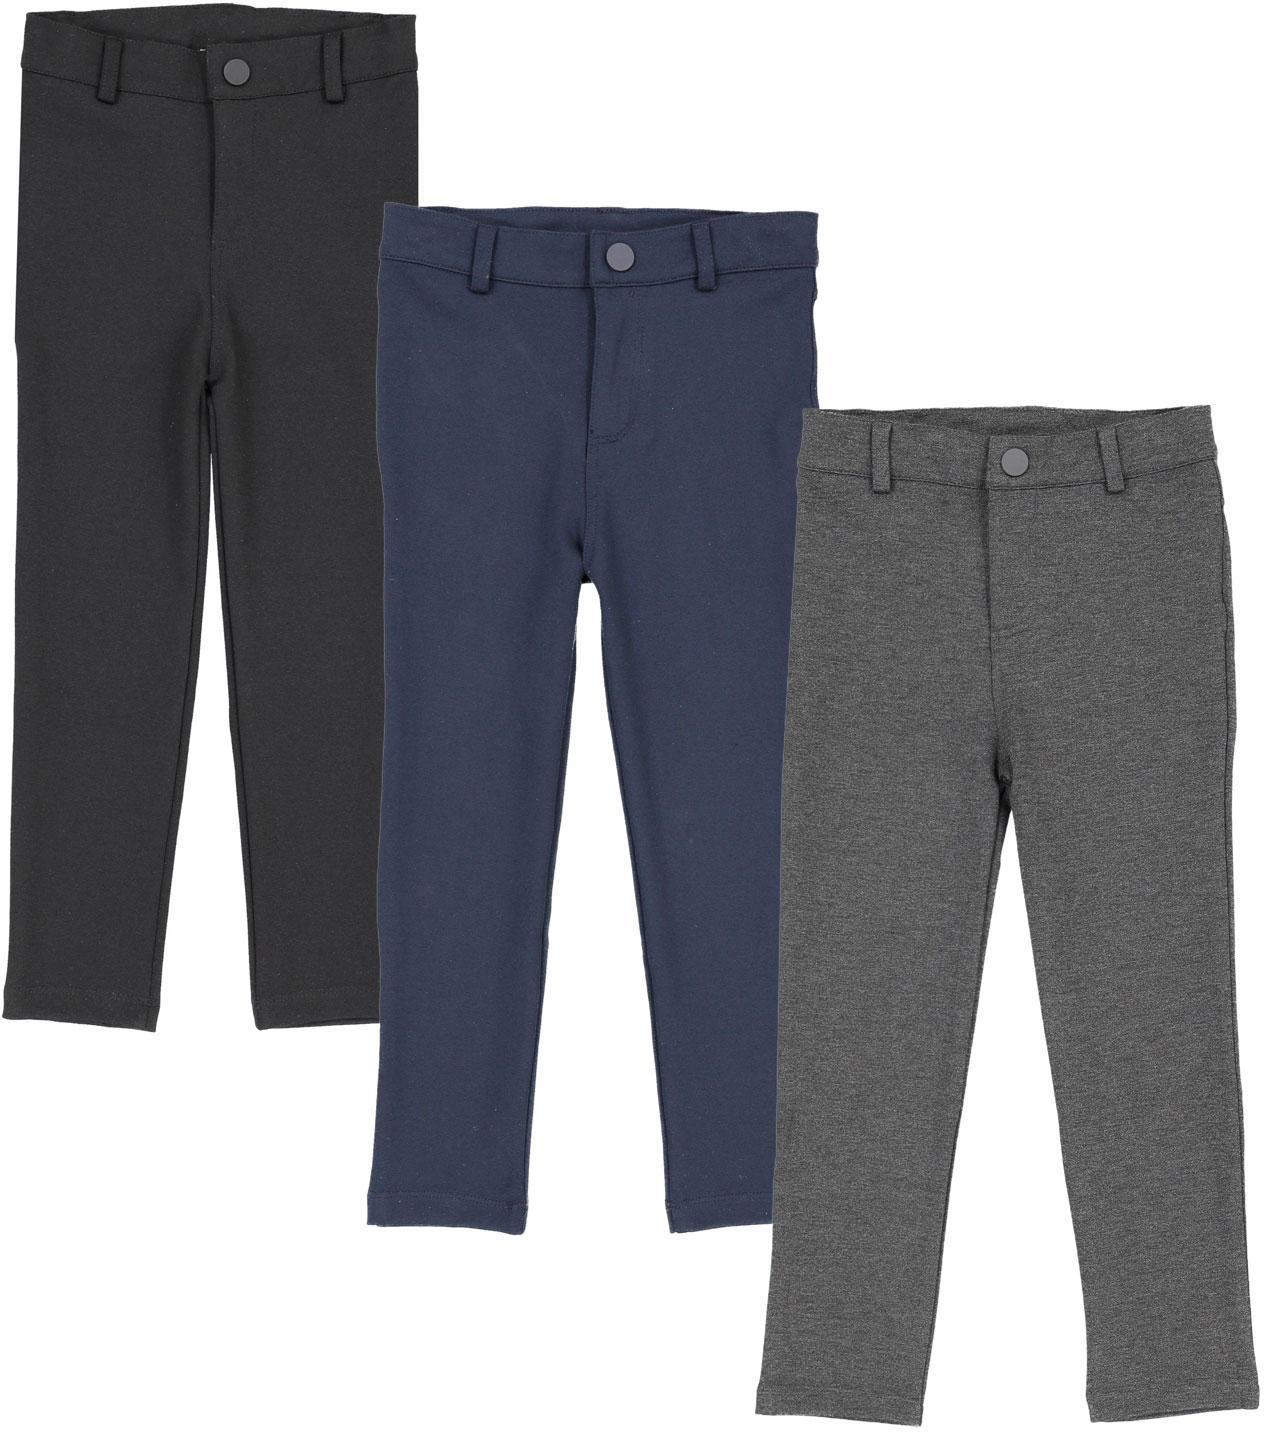 Boys Flat Front Dress Pant PF110- Slacks With Belt Many Colors New Sizes 4  to 20 | eBay